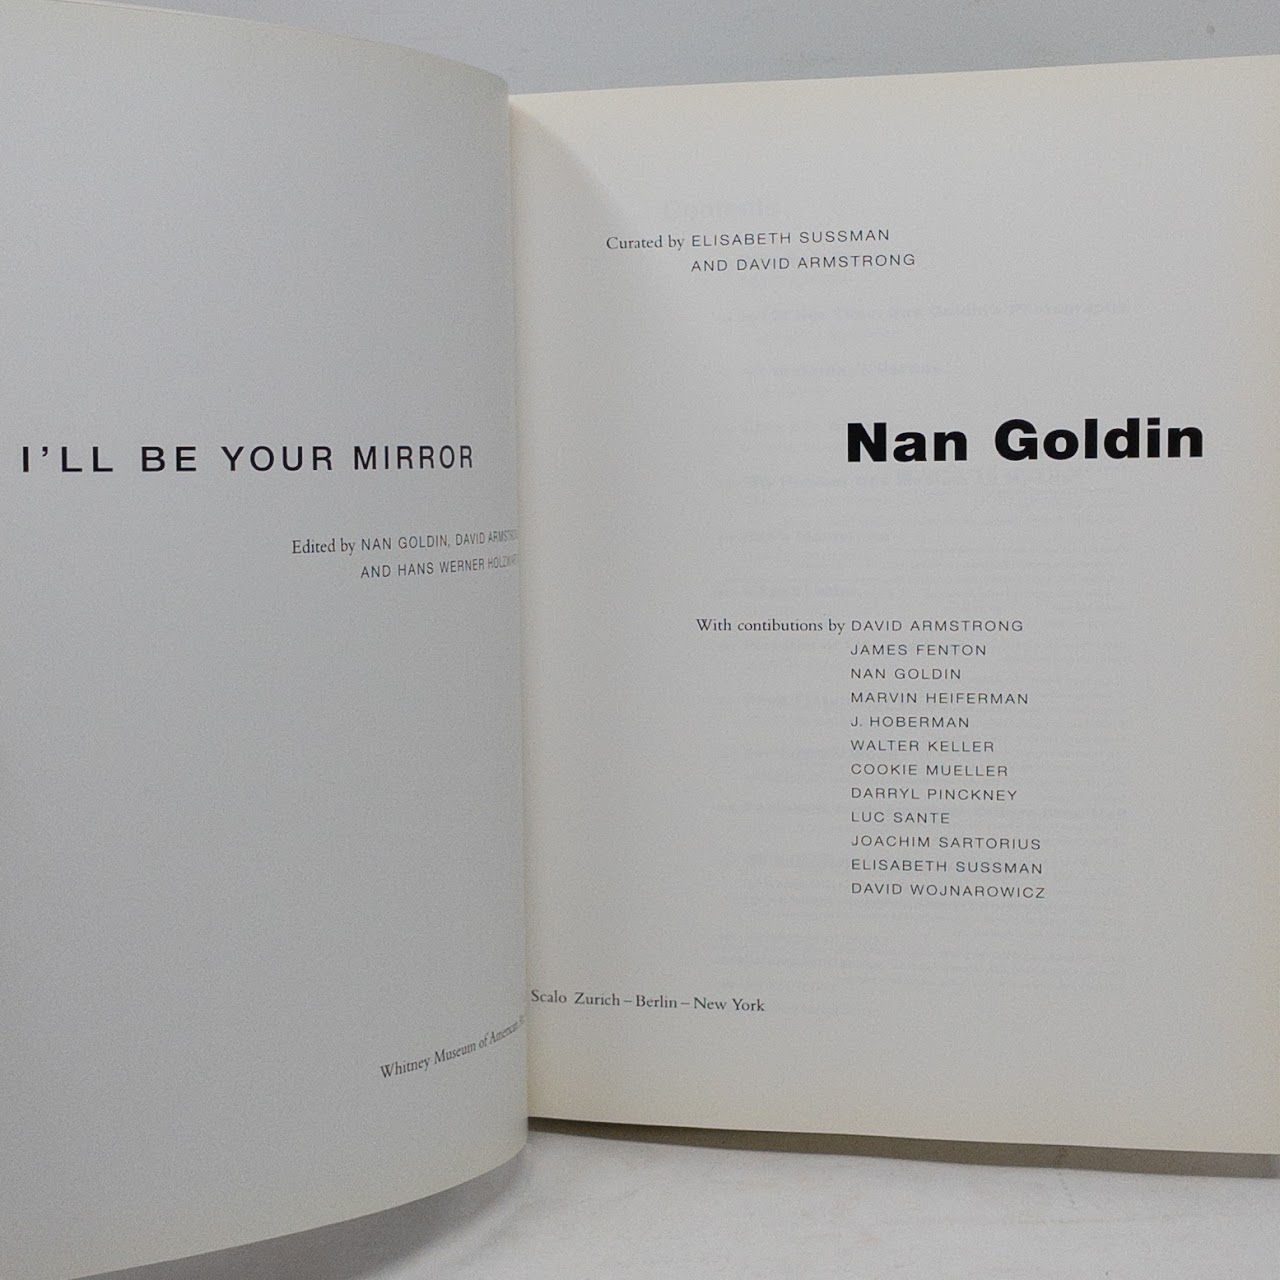 Nan Goldin "I'll Be Your Mirror" RARE Book